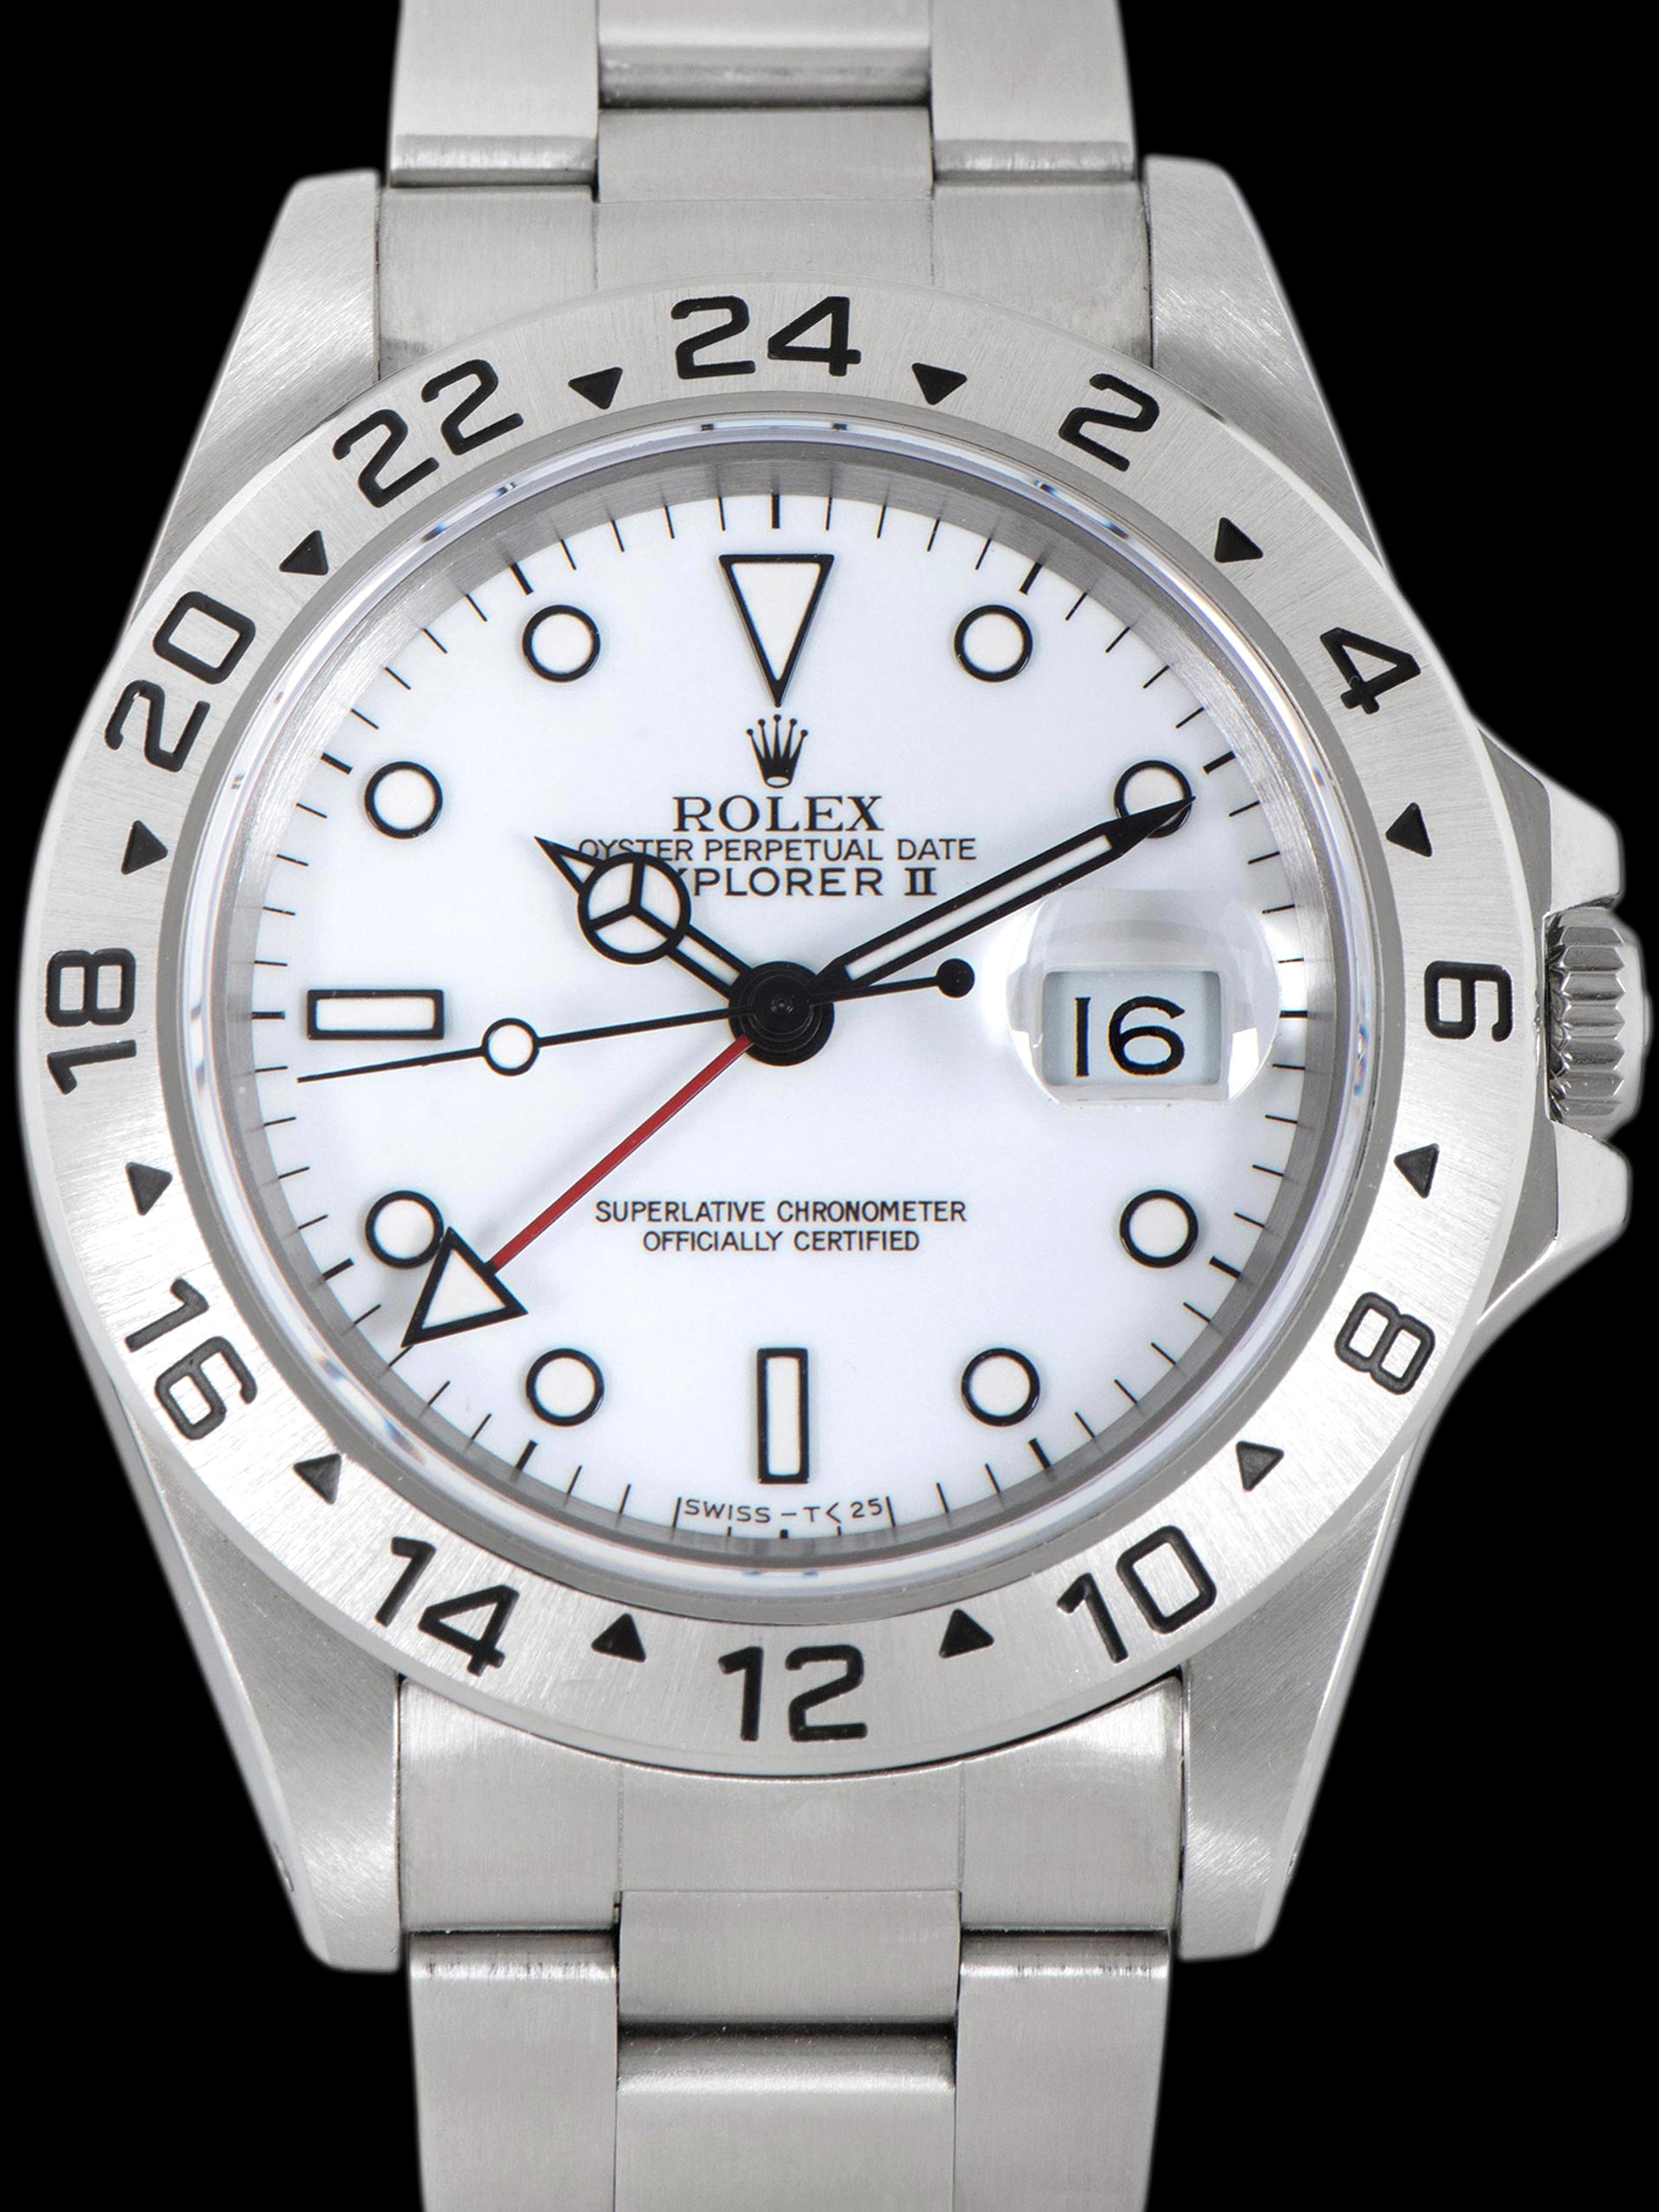 1991 Rolex Explorer II (Ref. 16570) "Polar" Dial